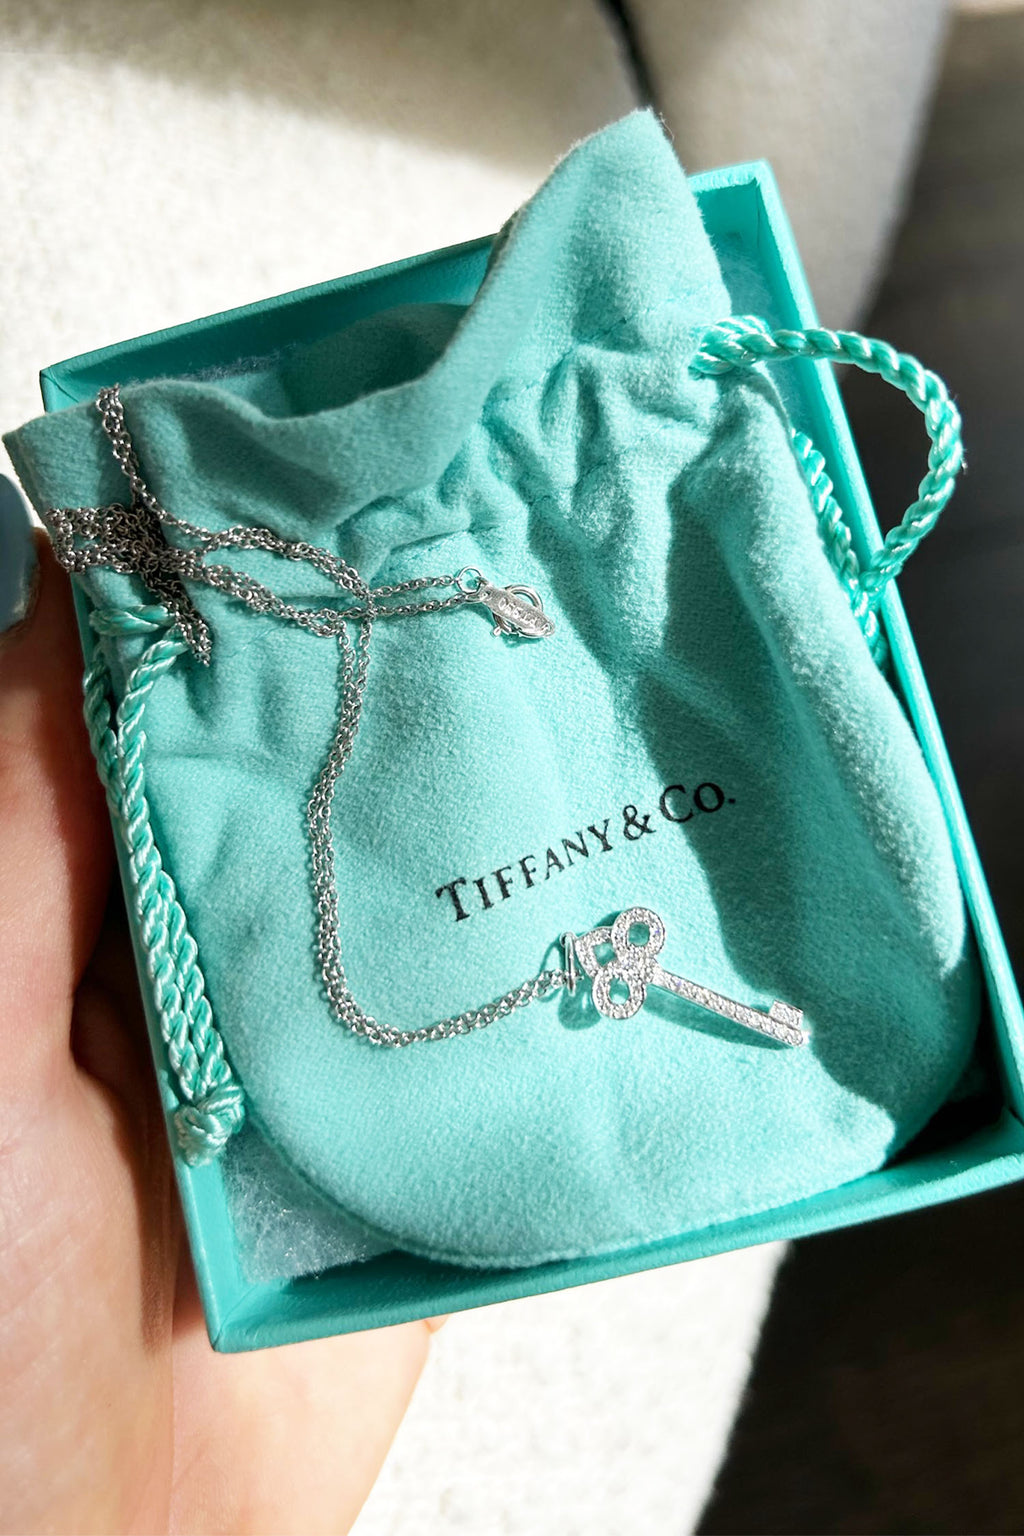 Tiffany & Co. Platinum Diamond Mini Fleur De Lis Key Necklace